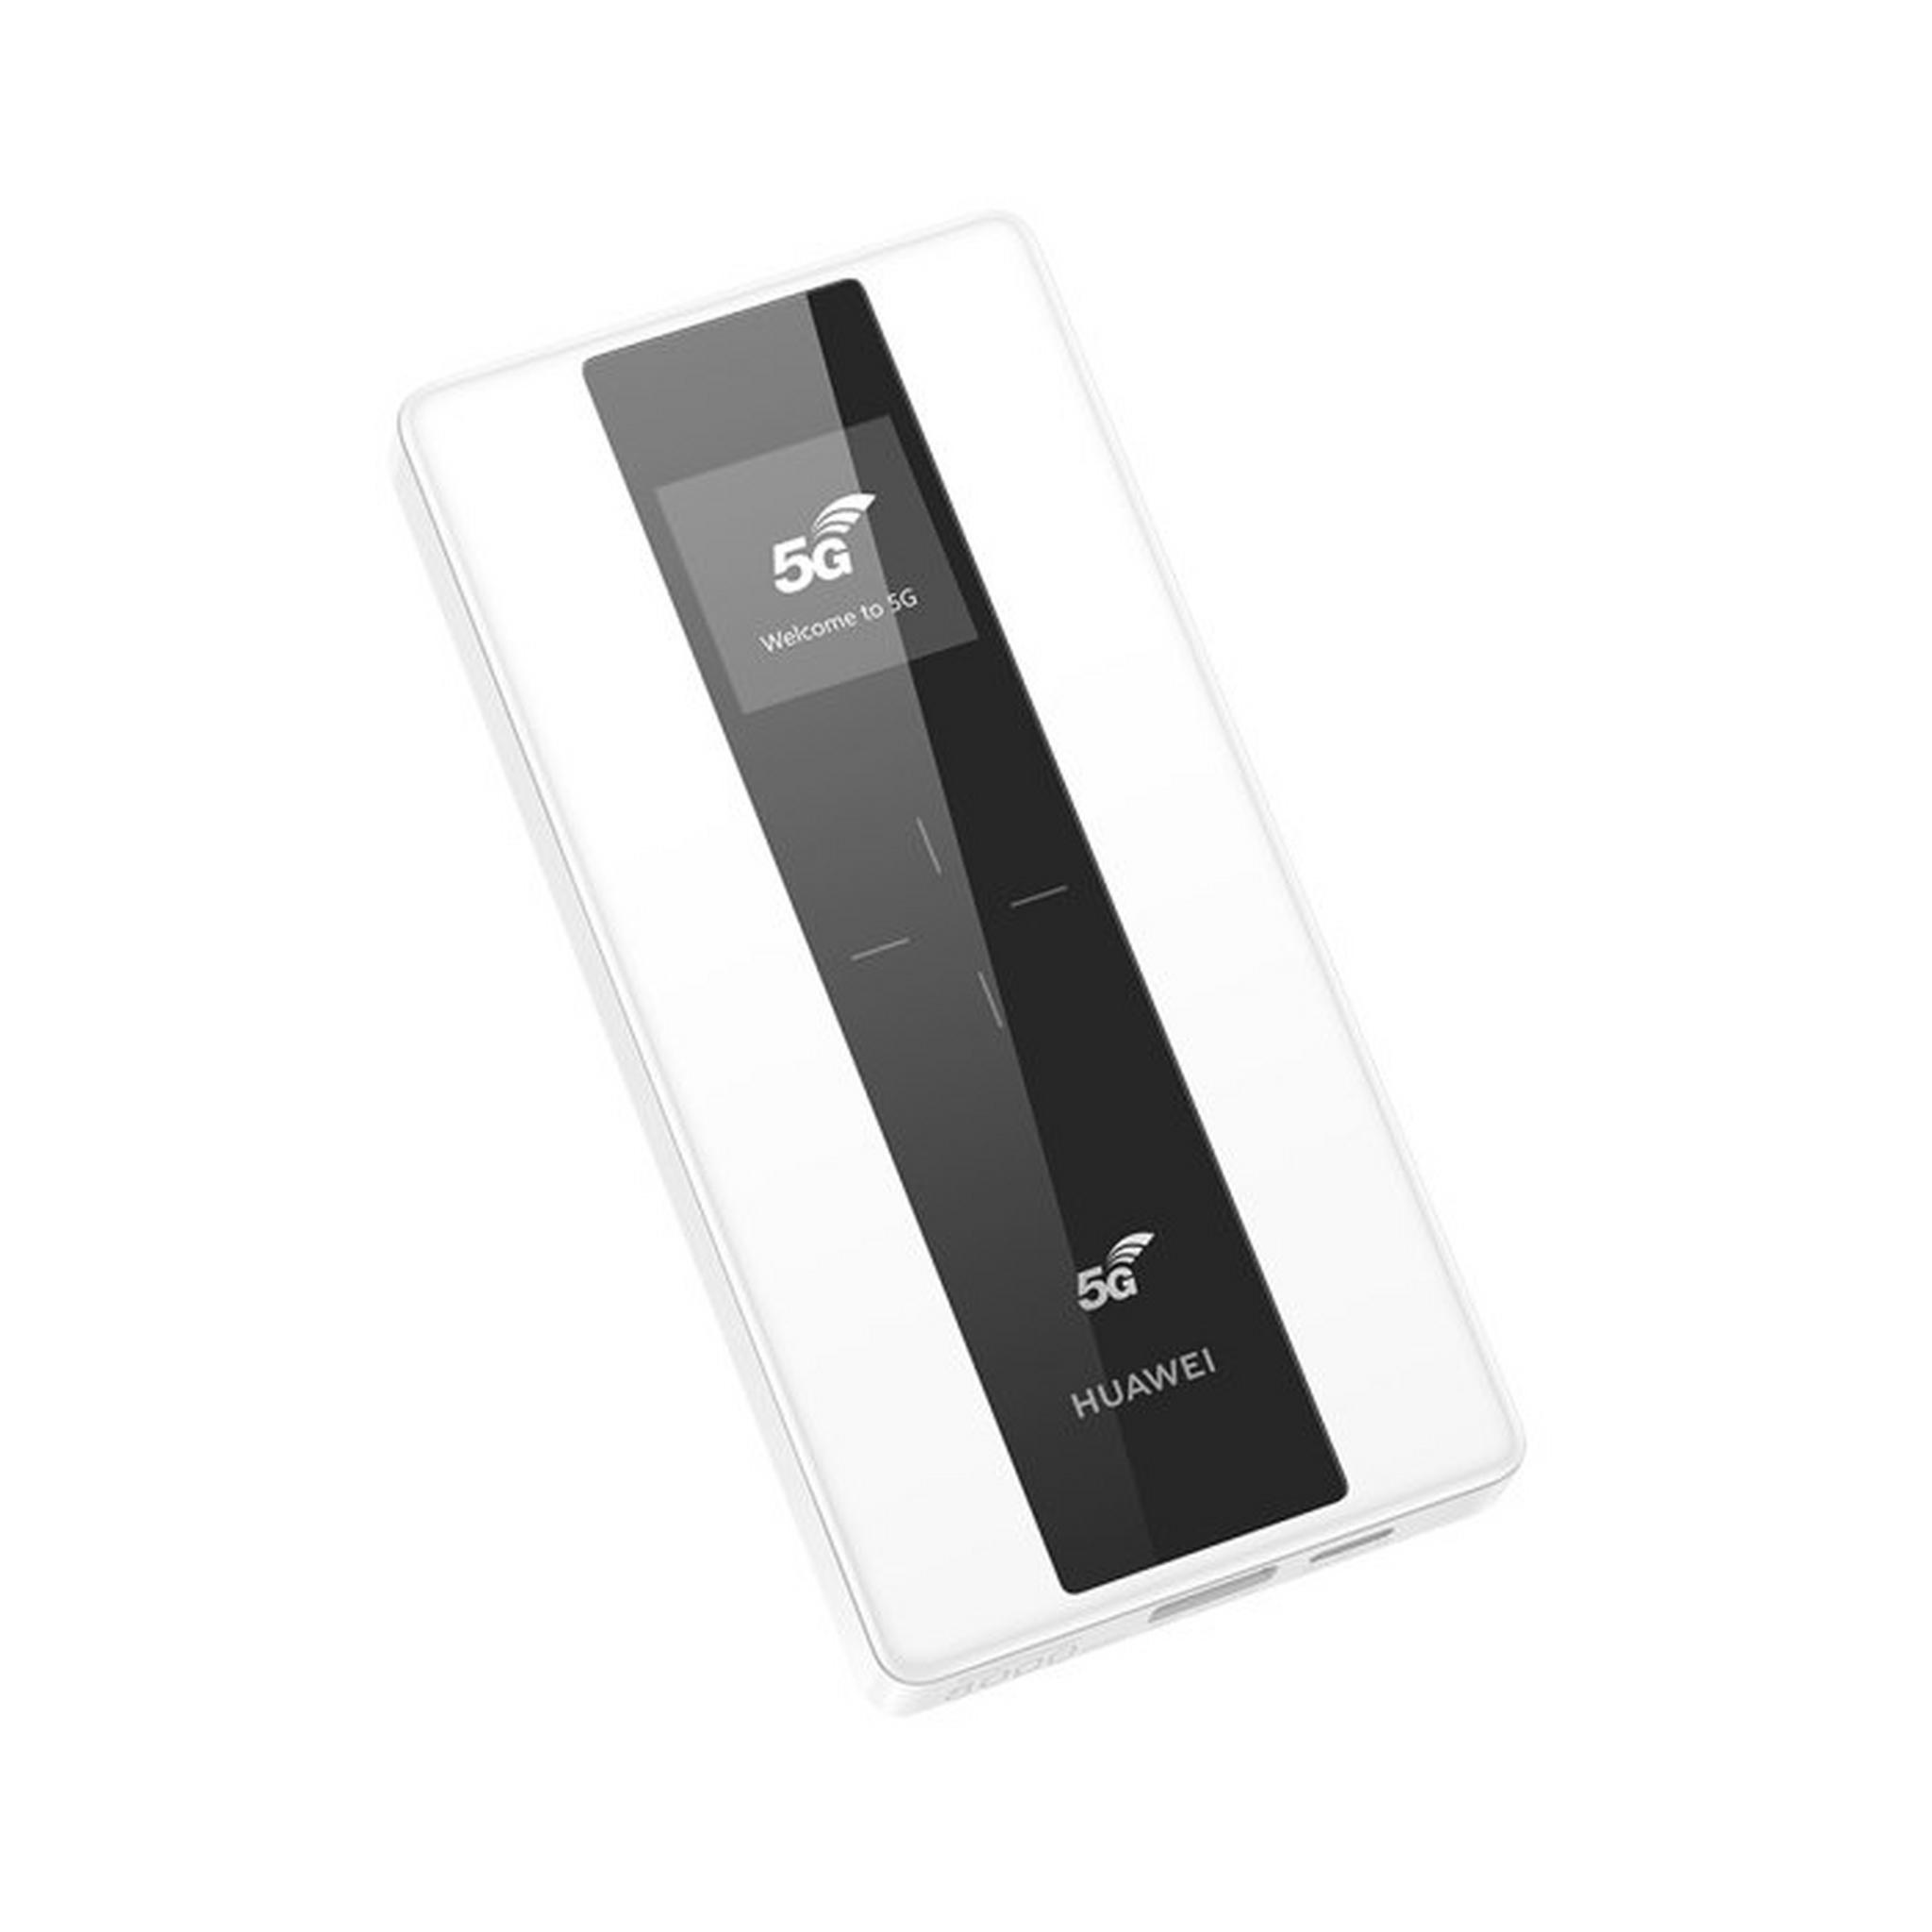 Huawei 5G Mobile WiFi (E6878-870) - White